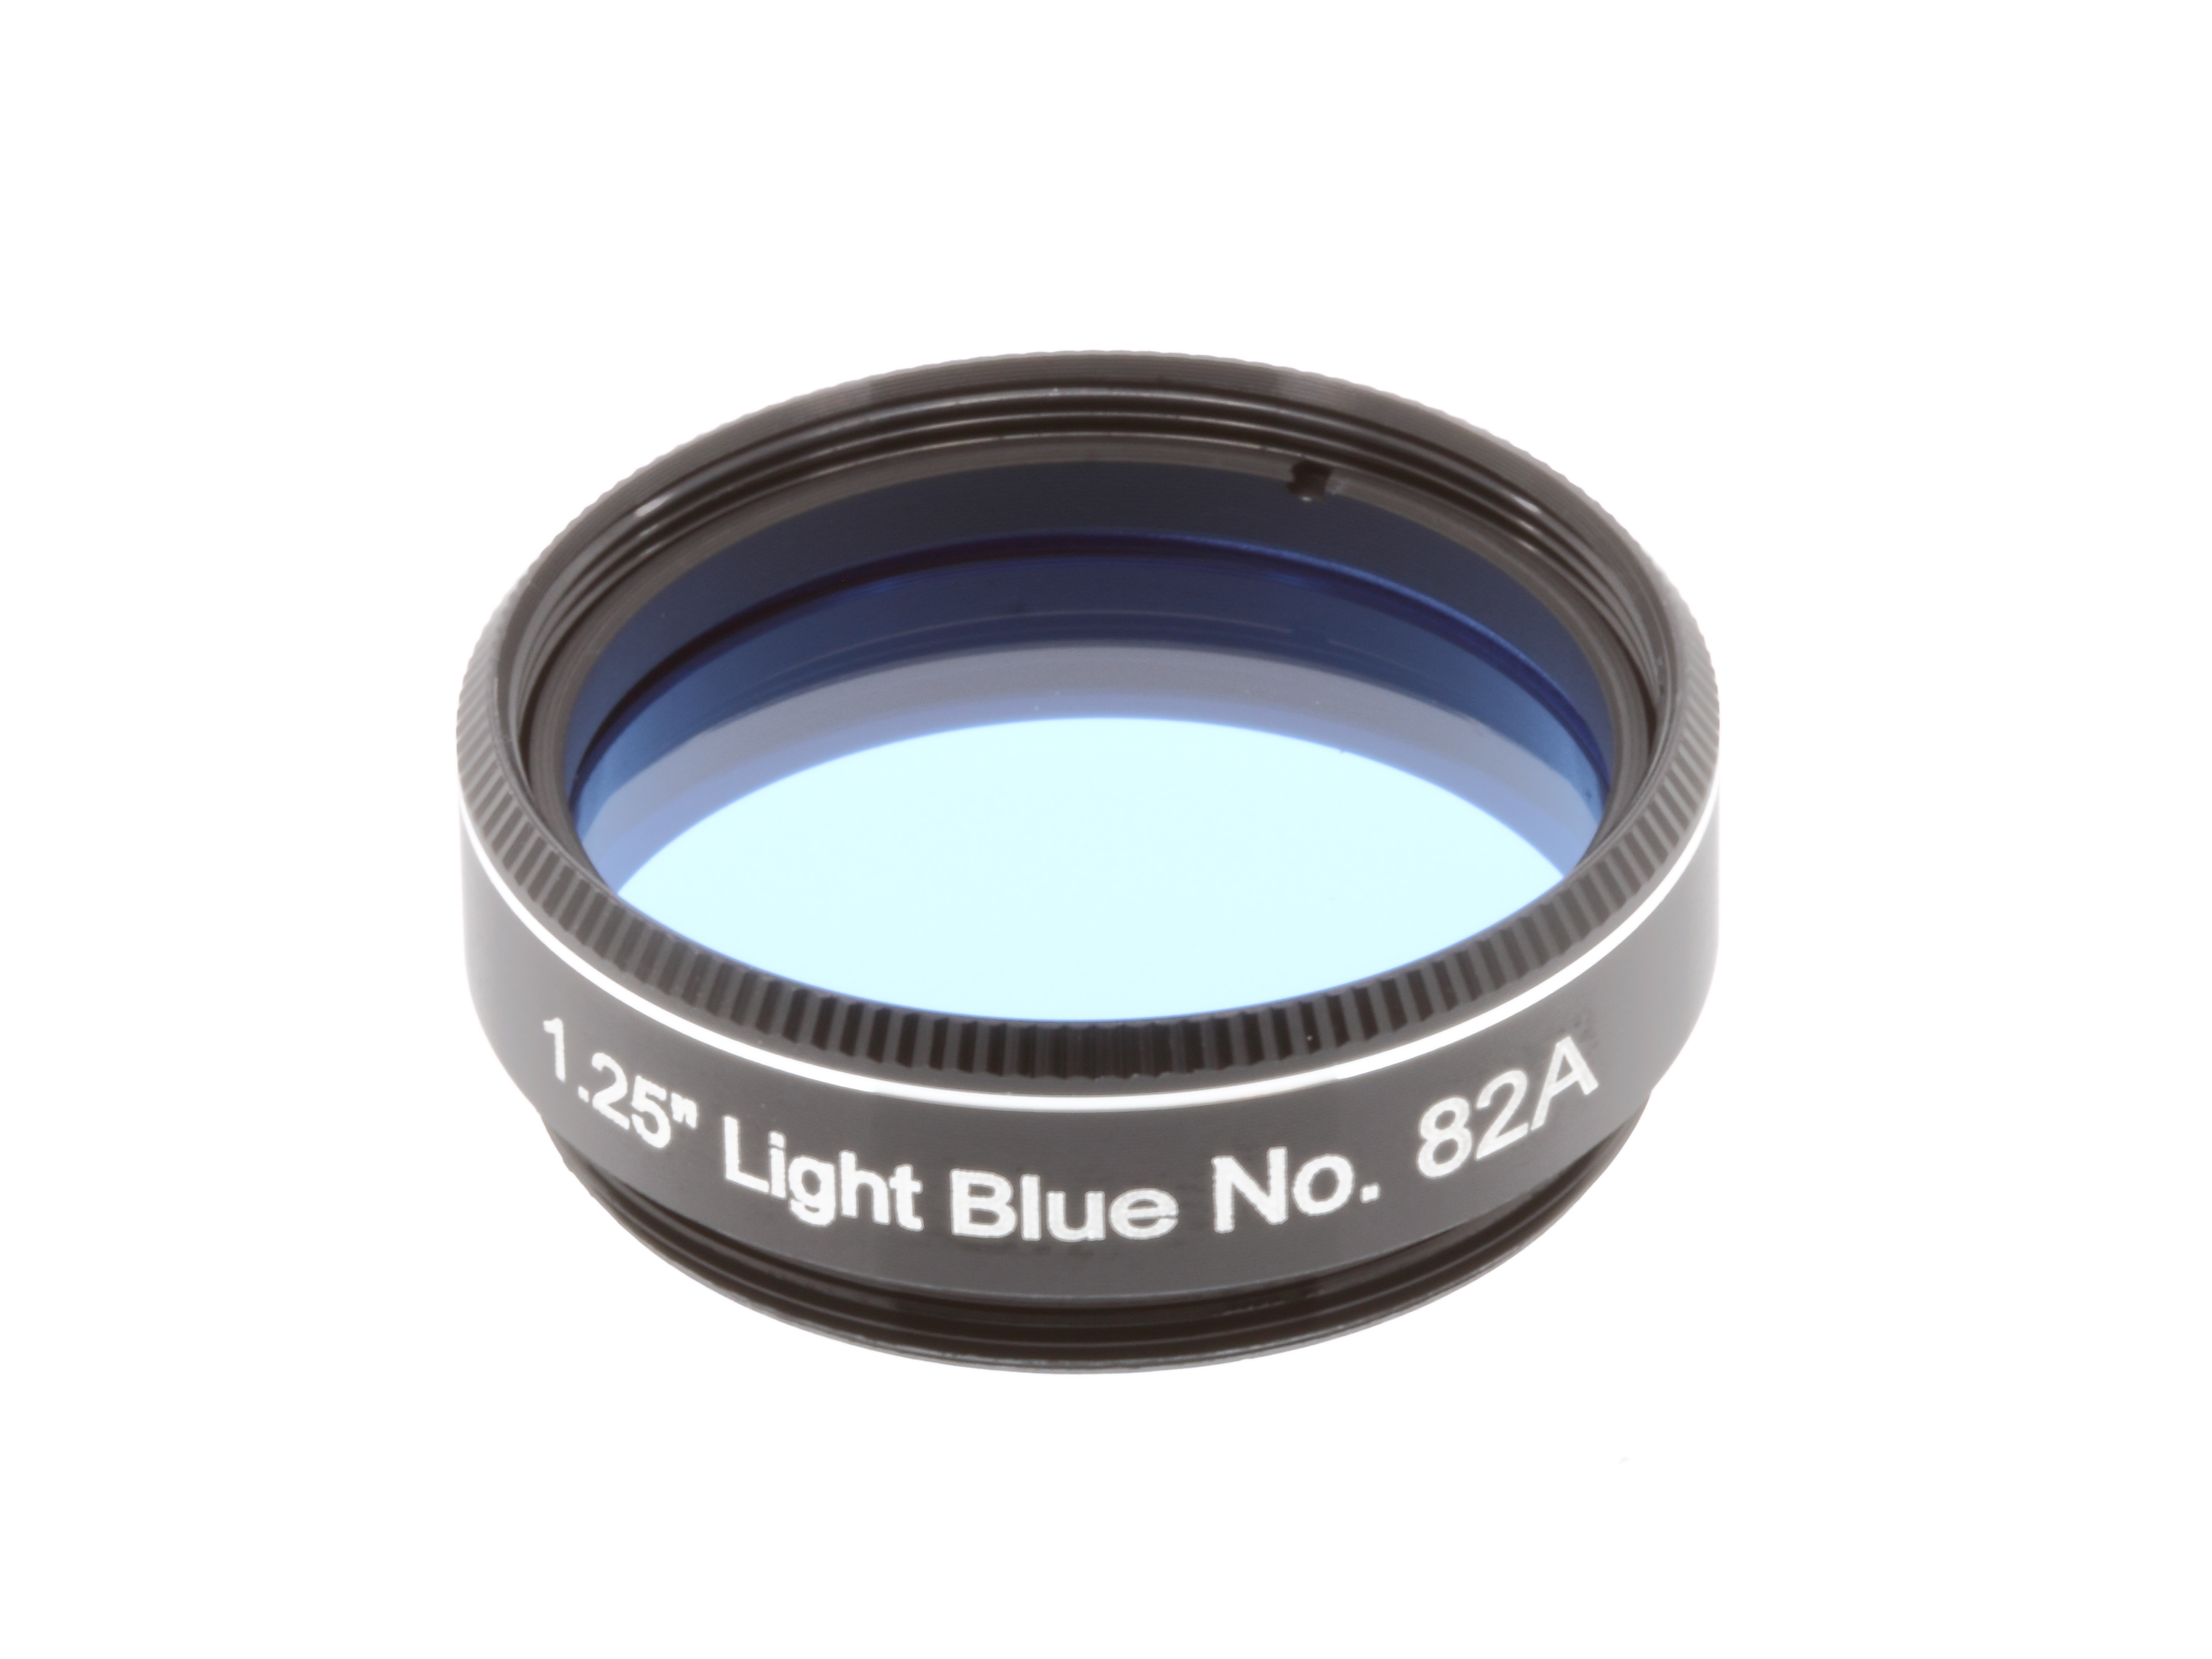 EXPLORE SCIENTIFIC Filter 1.25" Light Blue No.82A 